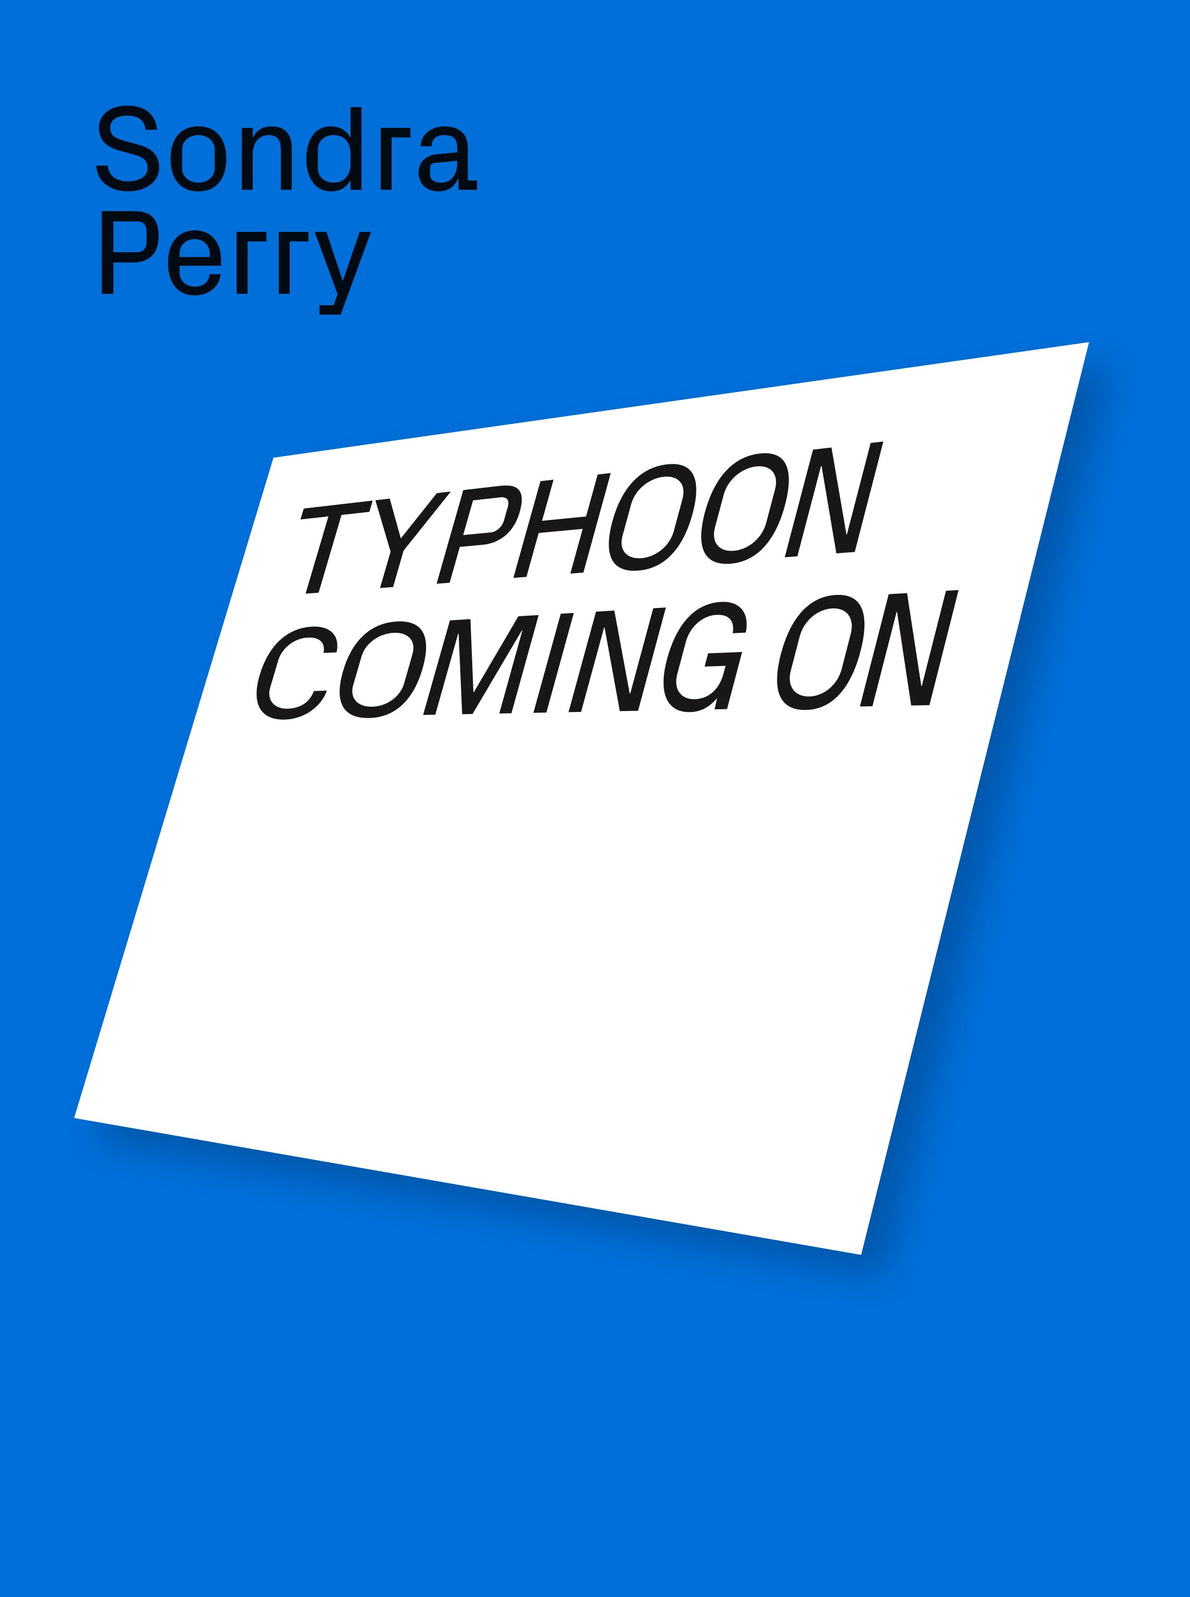 Sondra Perry: Typhoon coming on